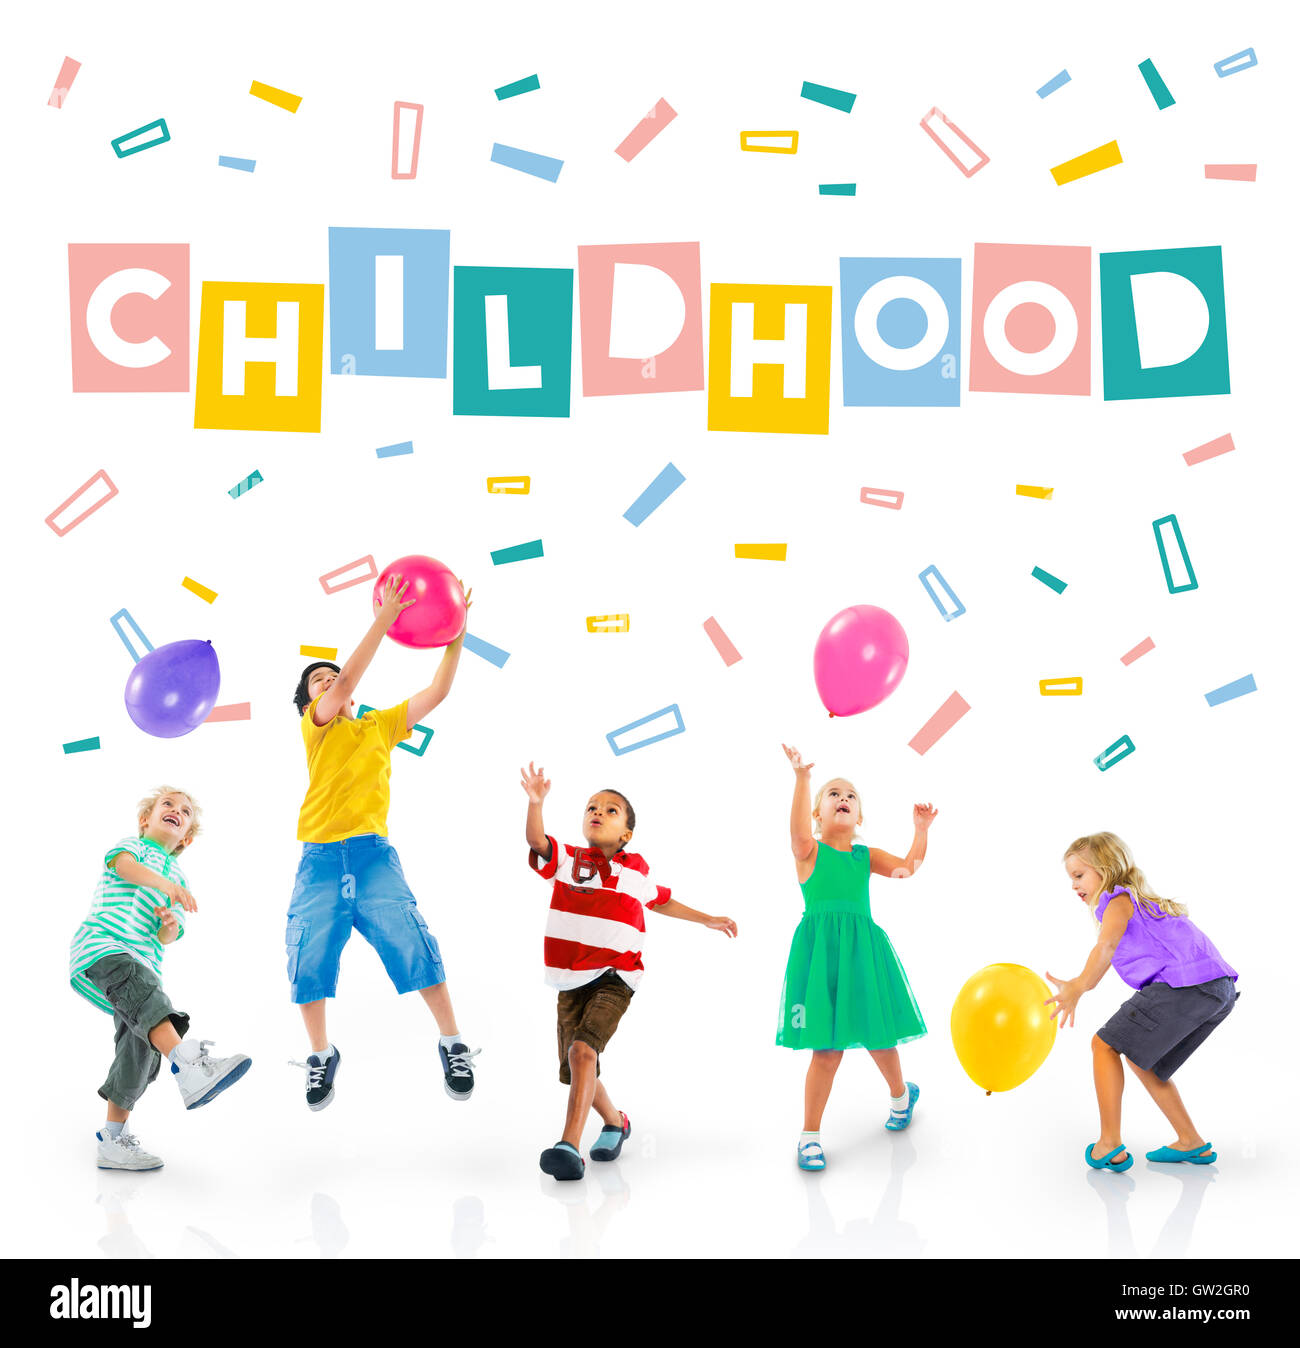 Childhood Children Confetti Cubes Graphic Concept Stock Photo